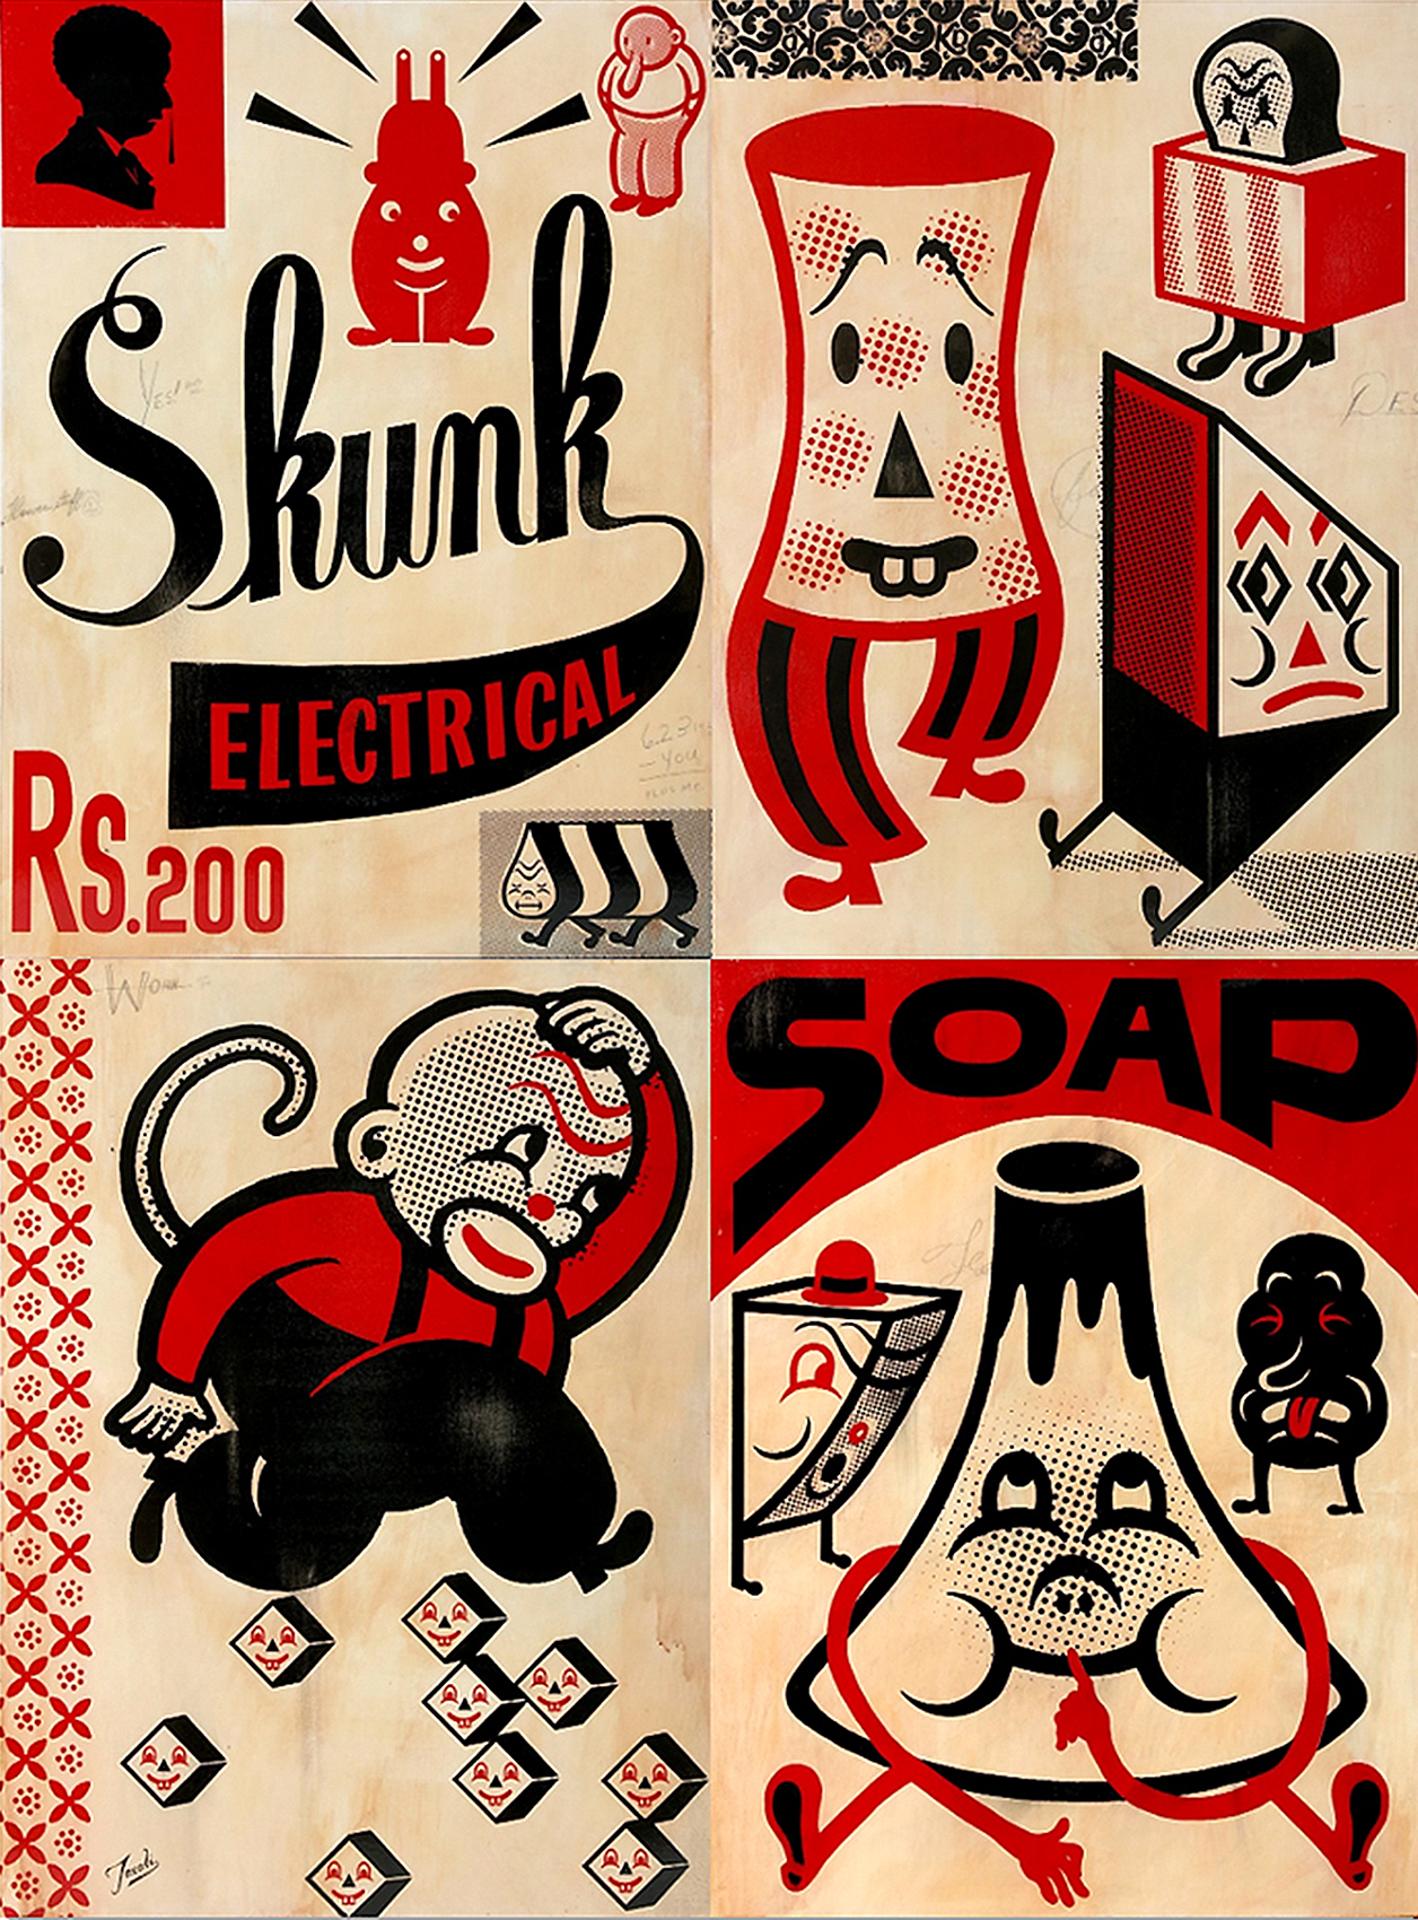 Gary Taxali - Skunk Electrical Soap, 2012